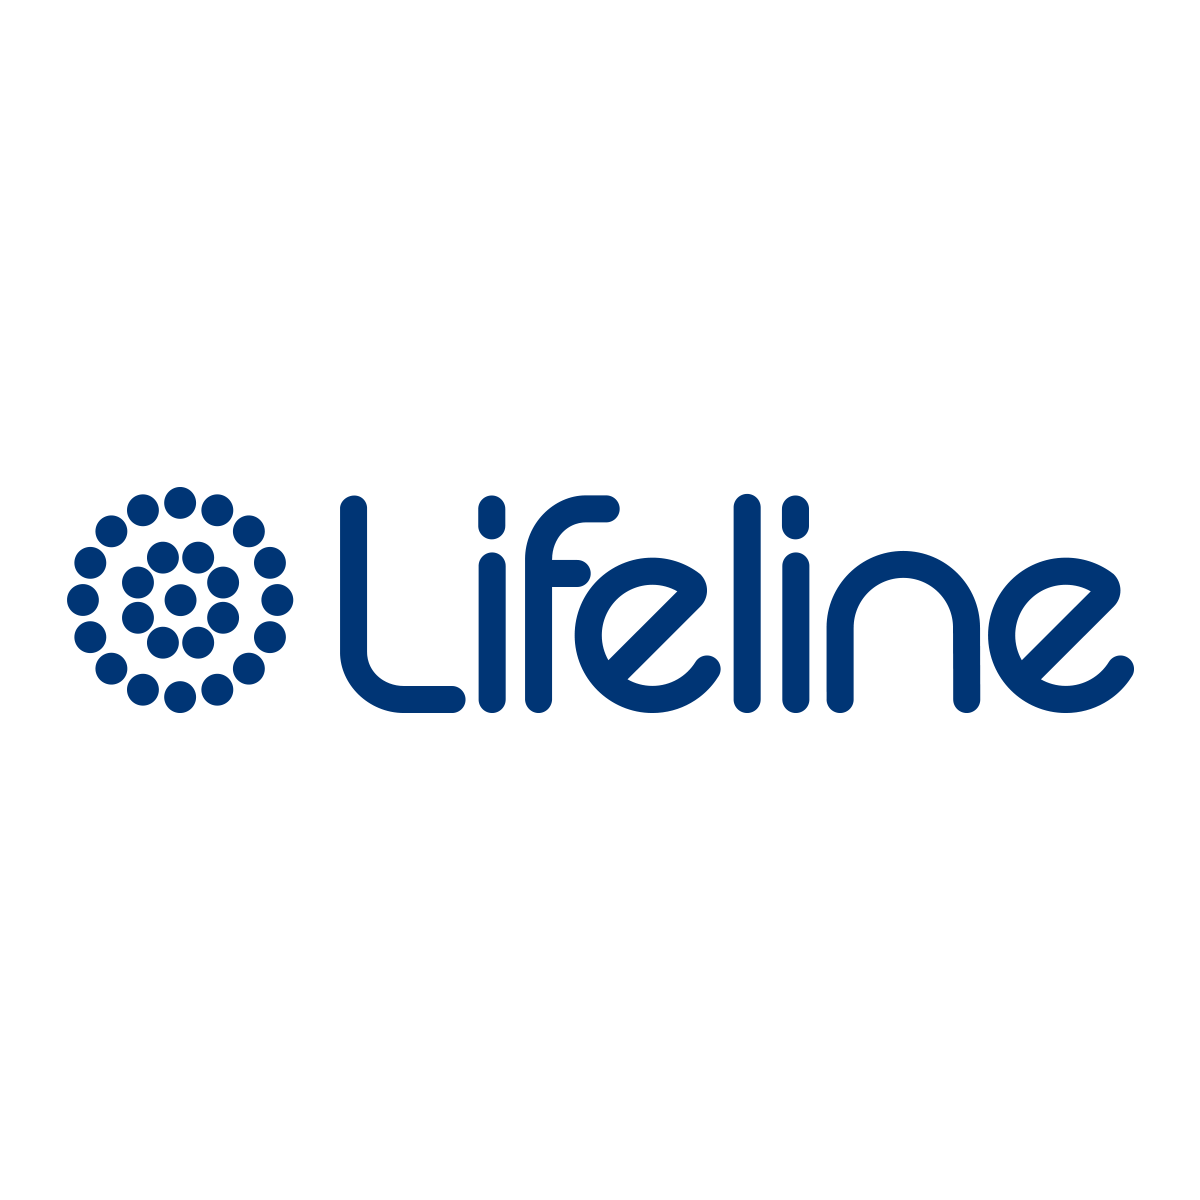 The Lifeline logo.